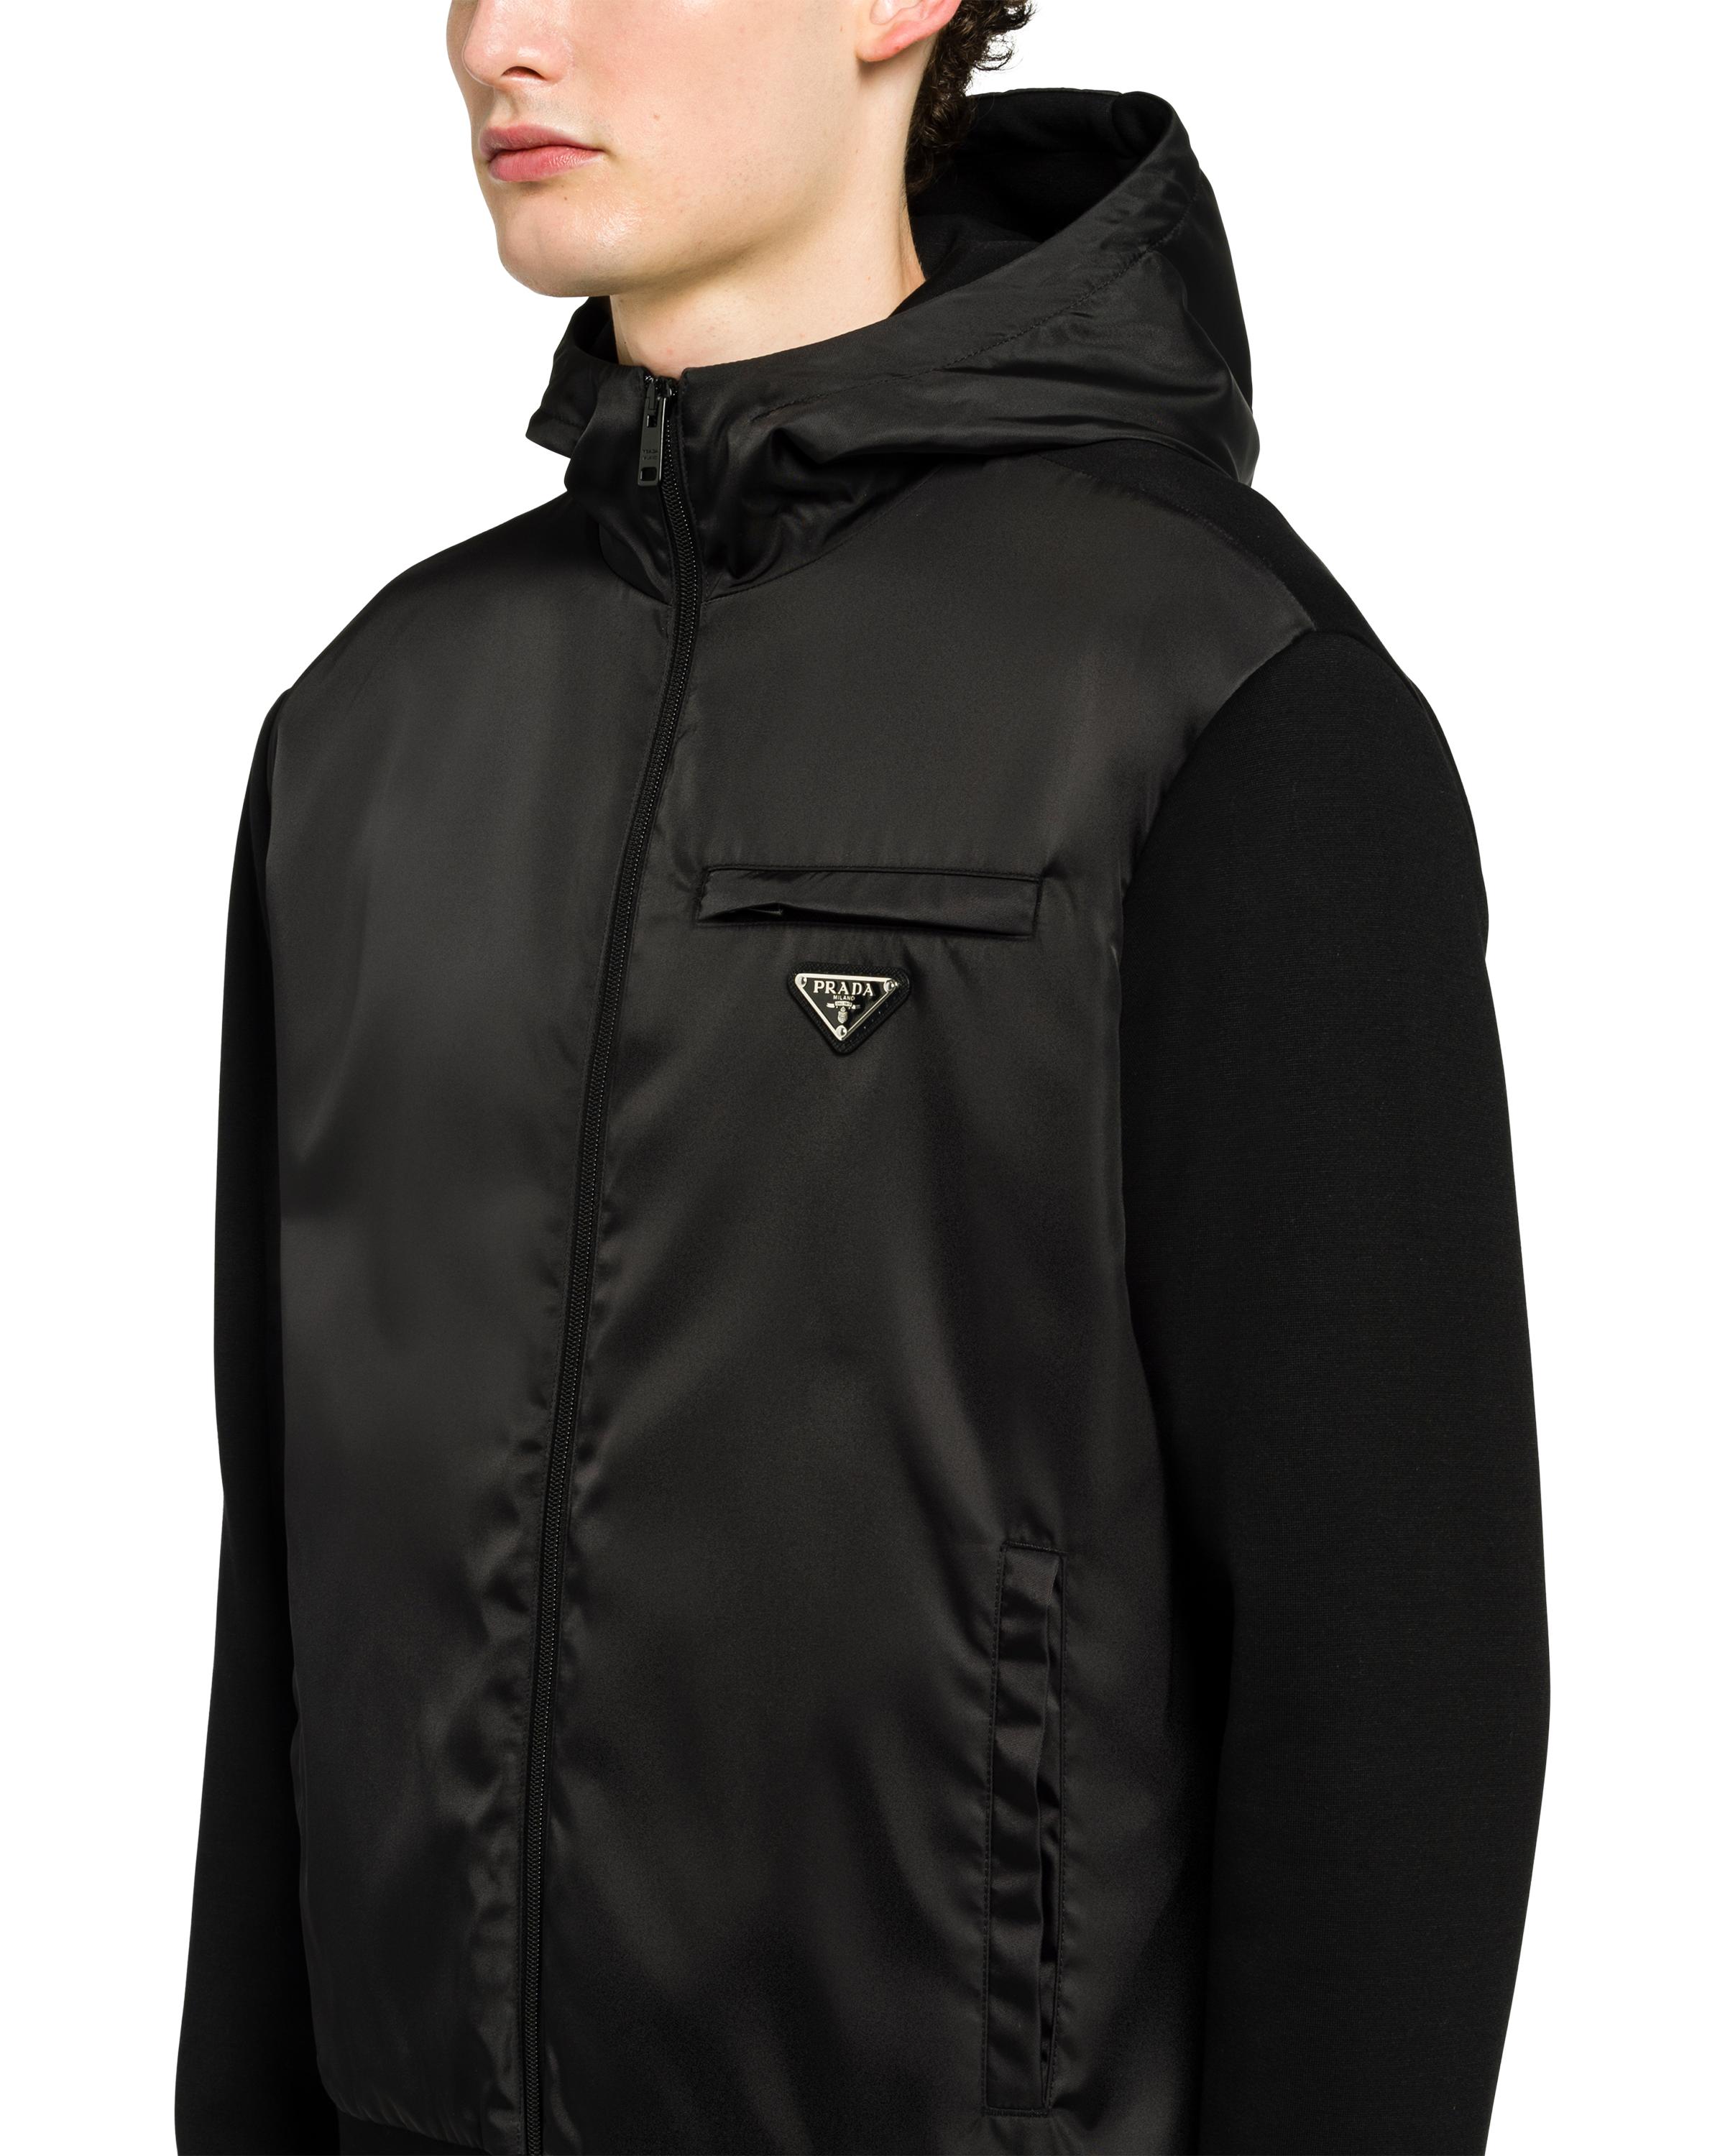 Prada Technical Cotton Fleece Jacket in Black/Black (Black) for Men - Lyst